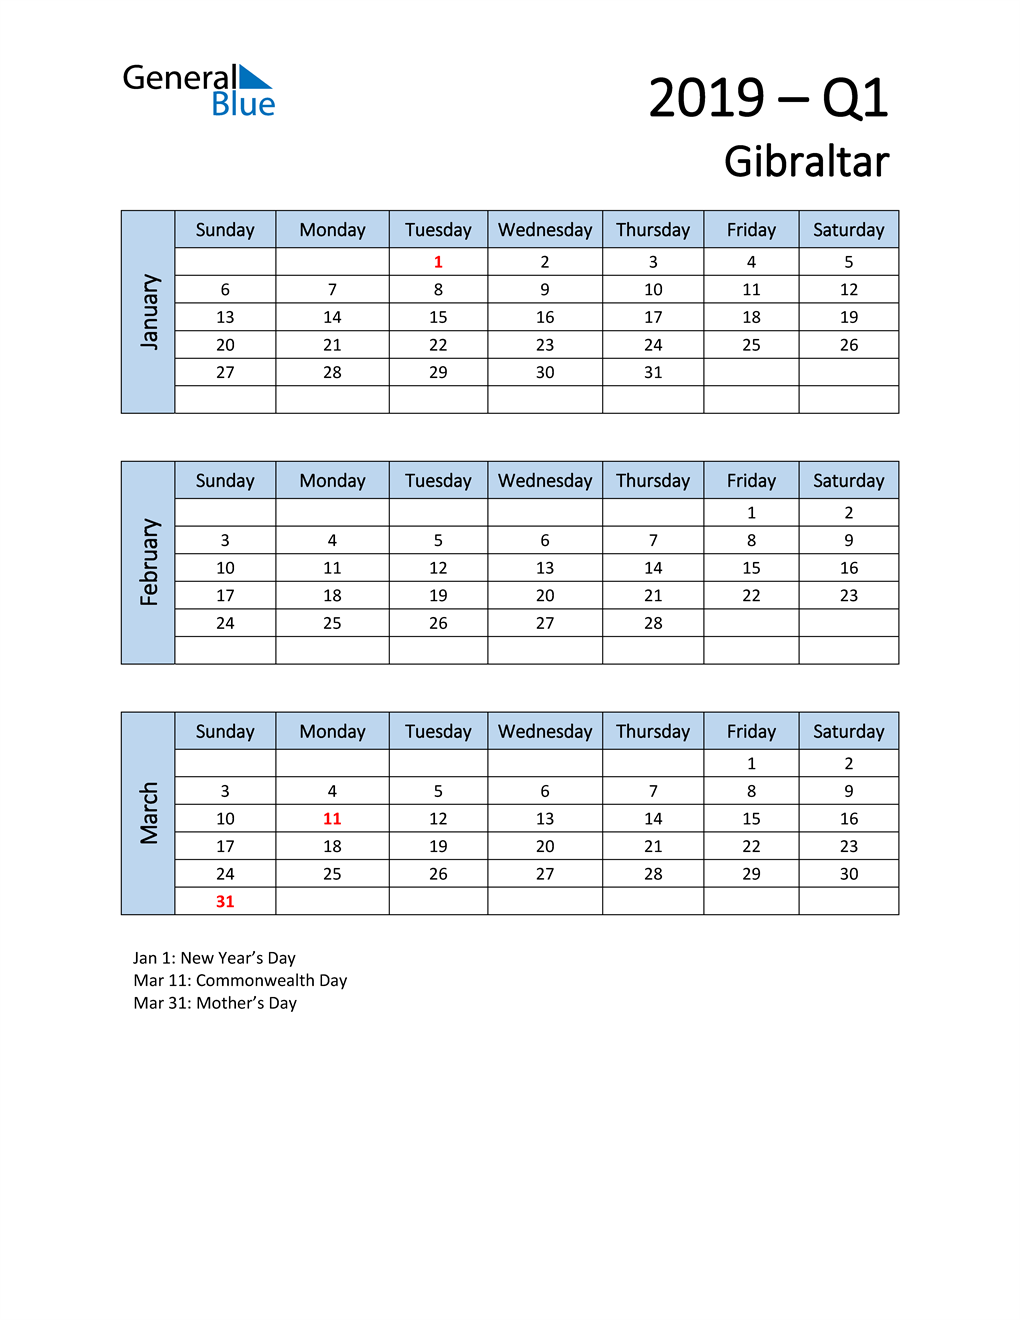  Free Q1 2019 Calendar for Gibraltar